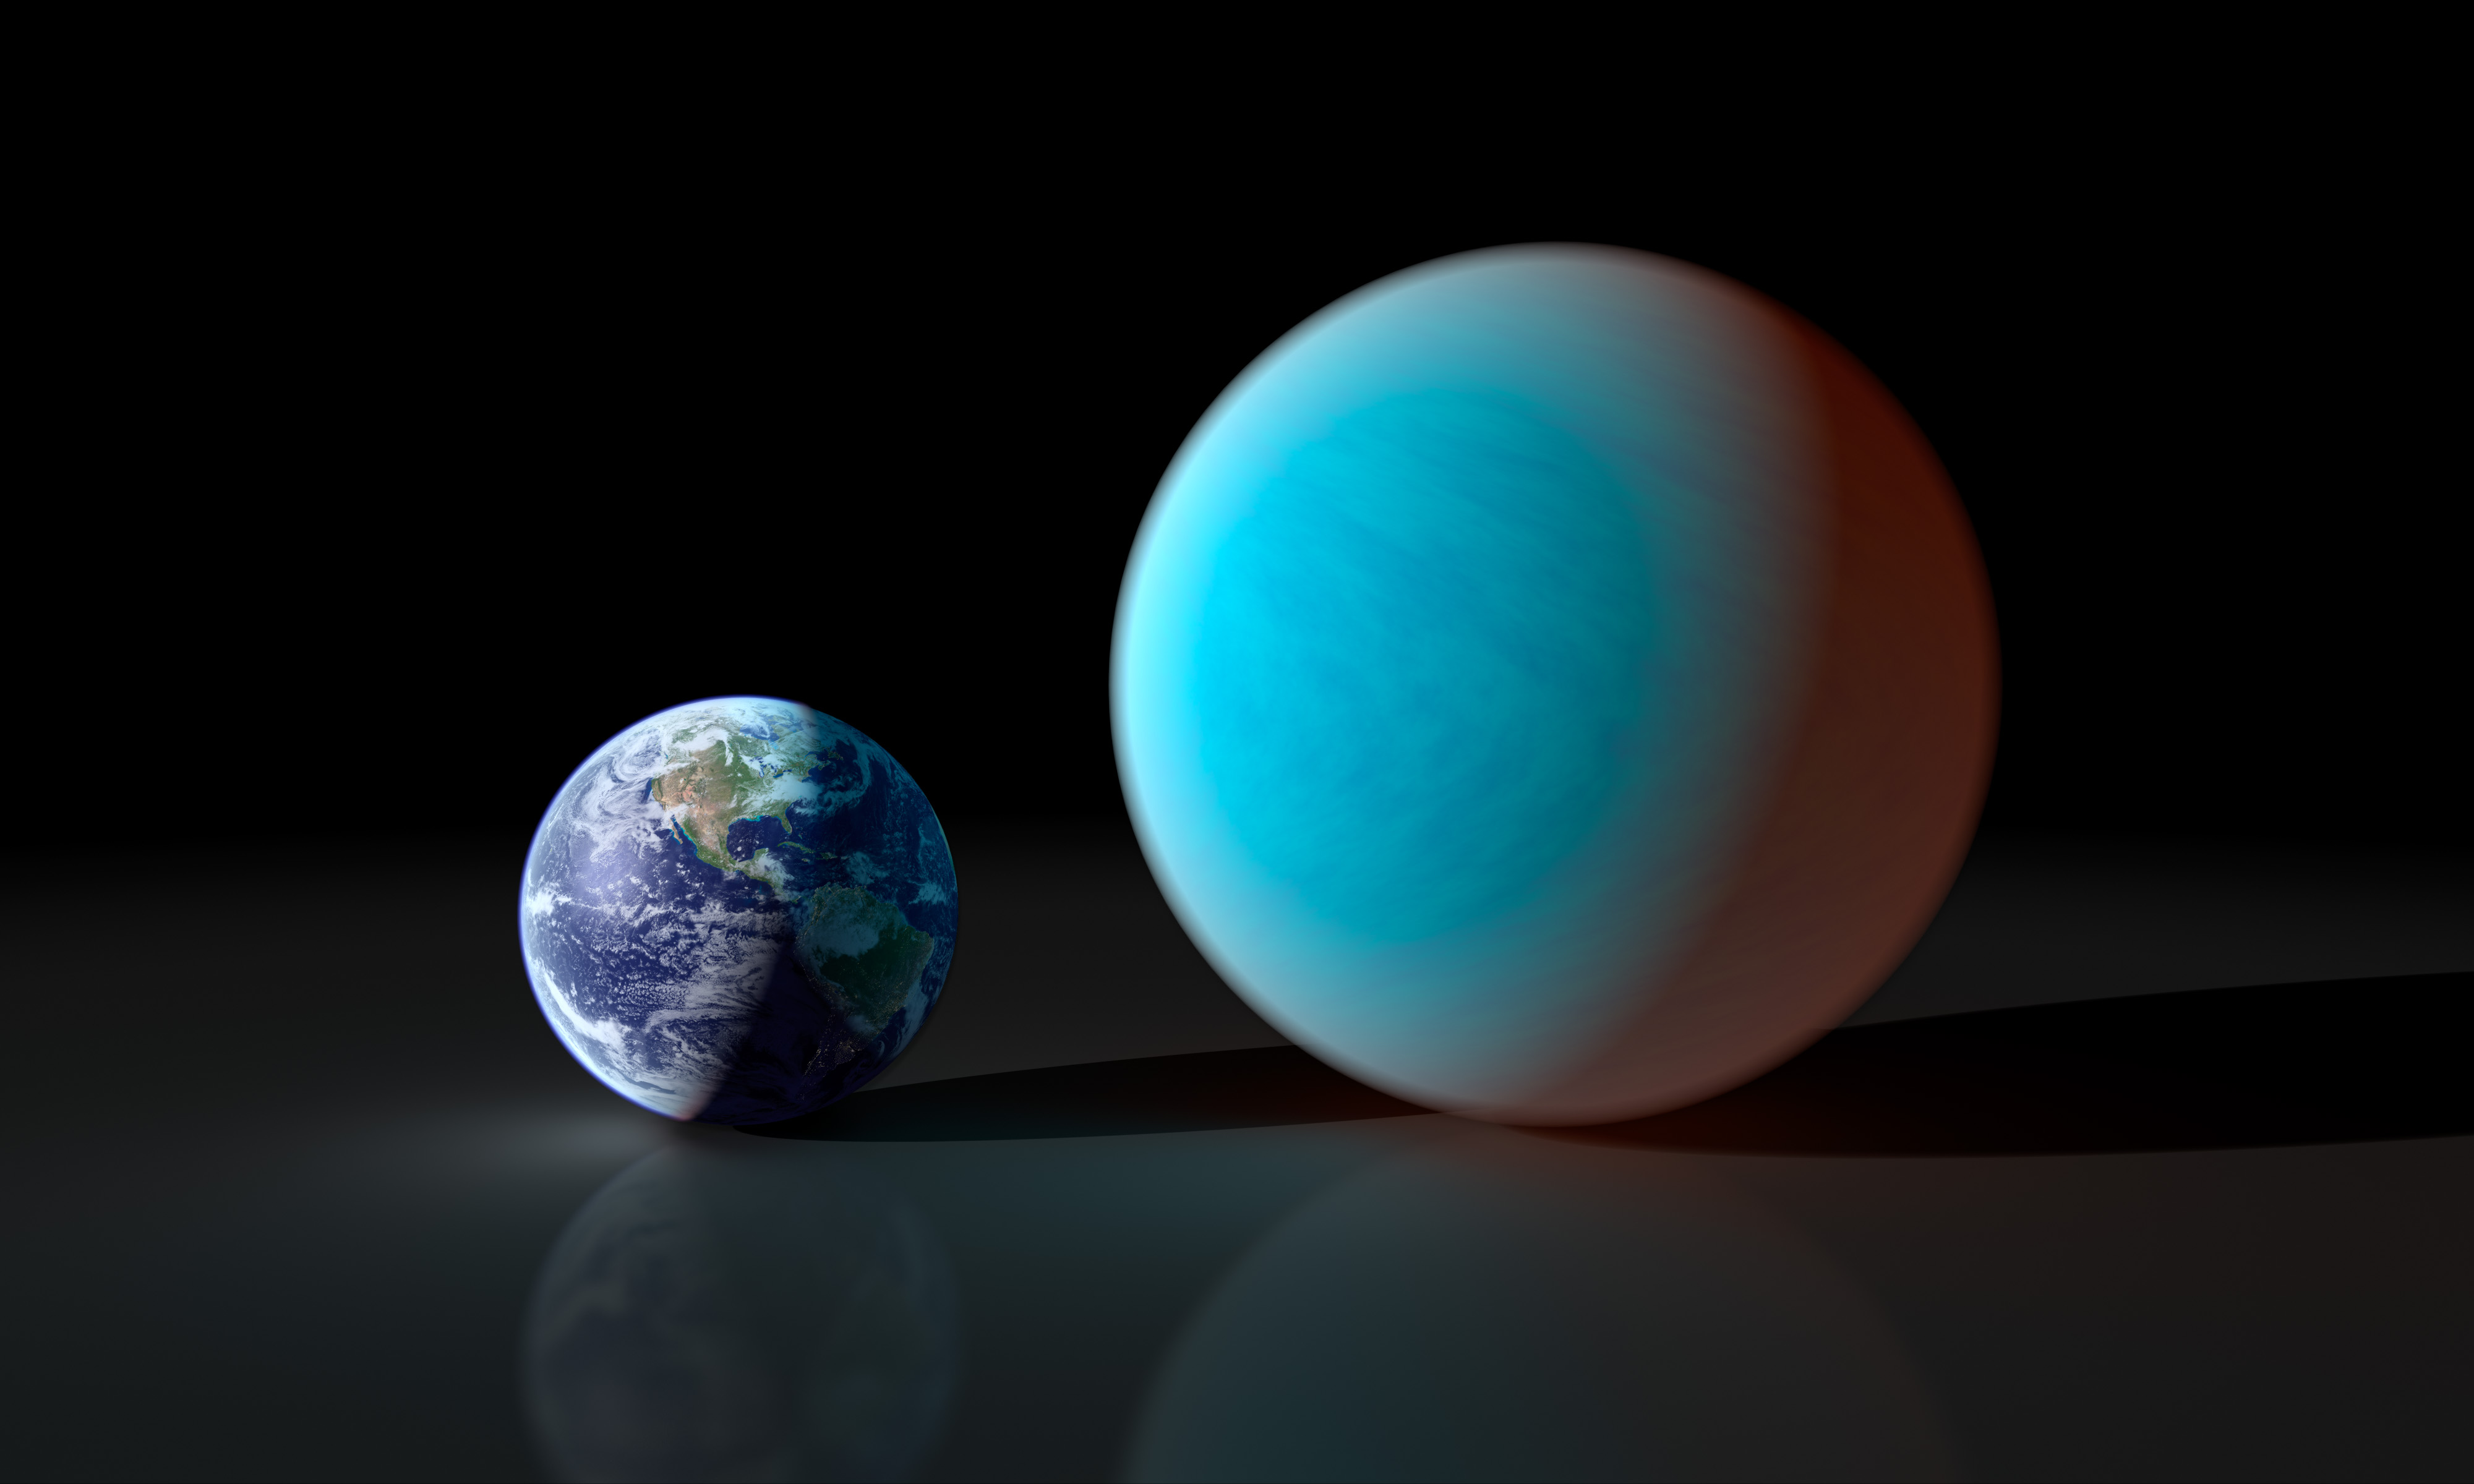 Earth-Like Planet Composed of Diamonds?